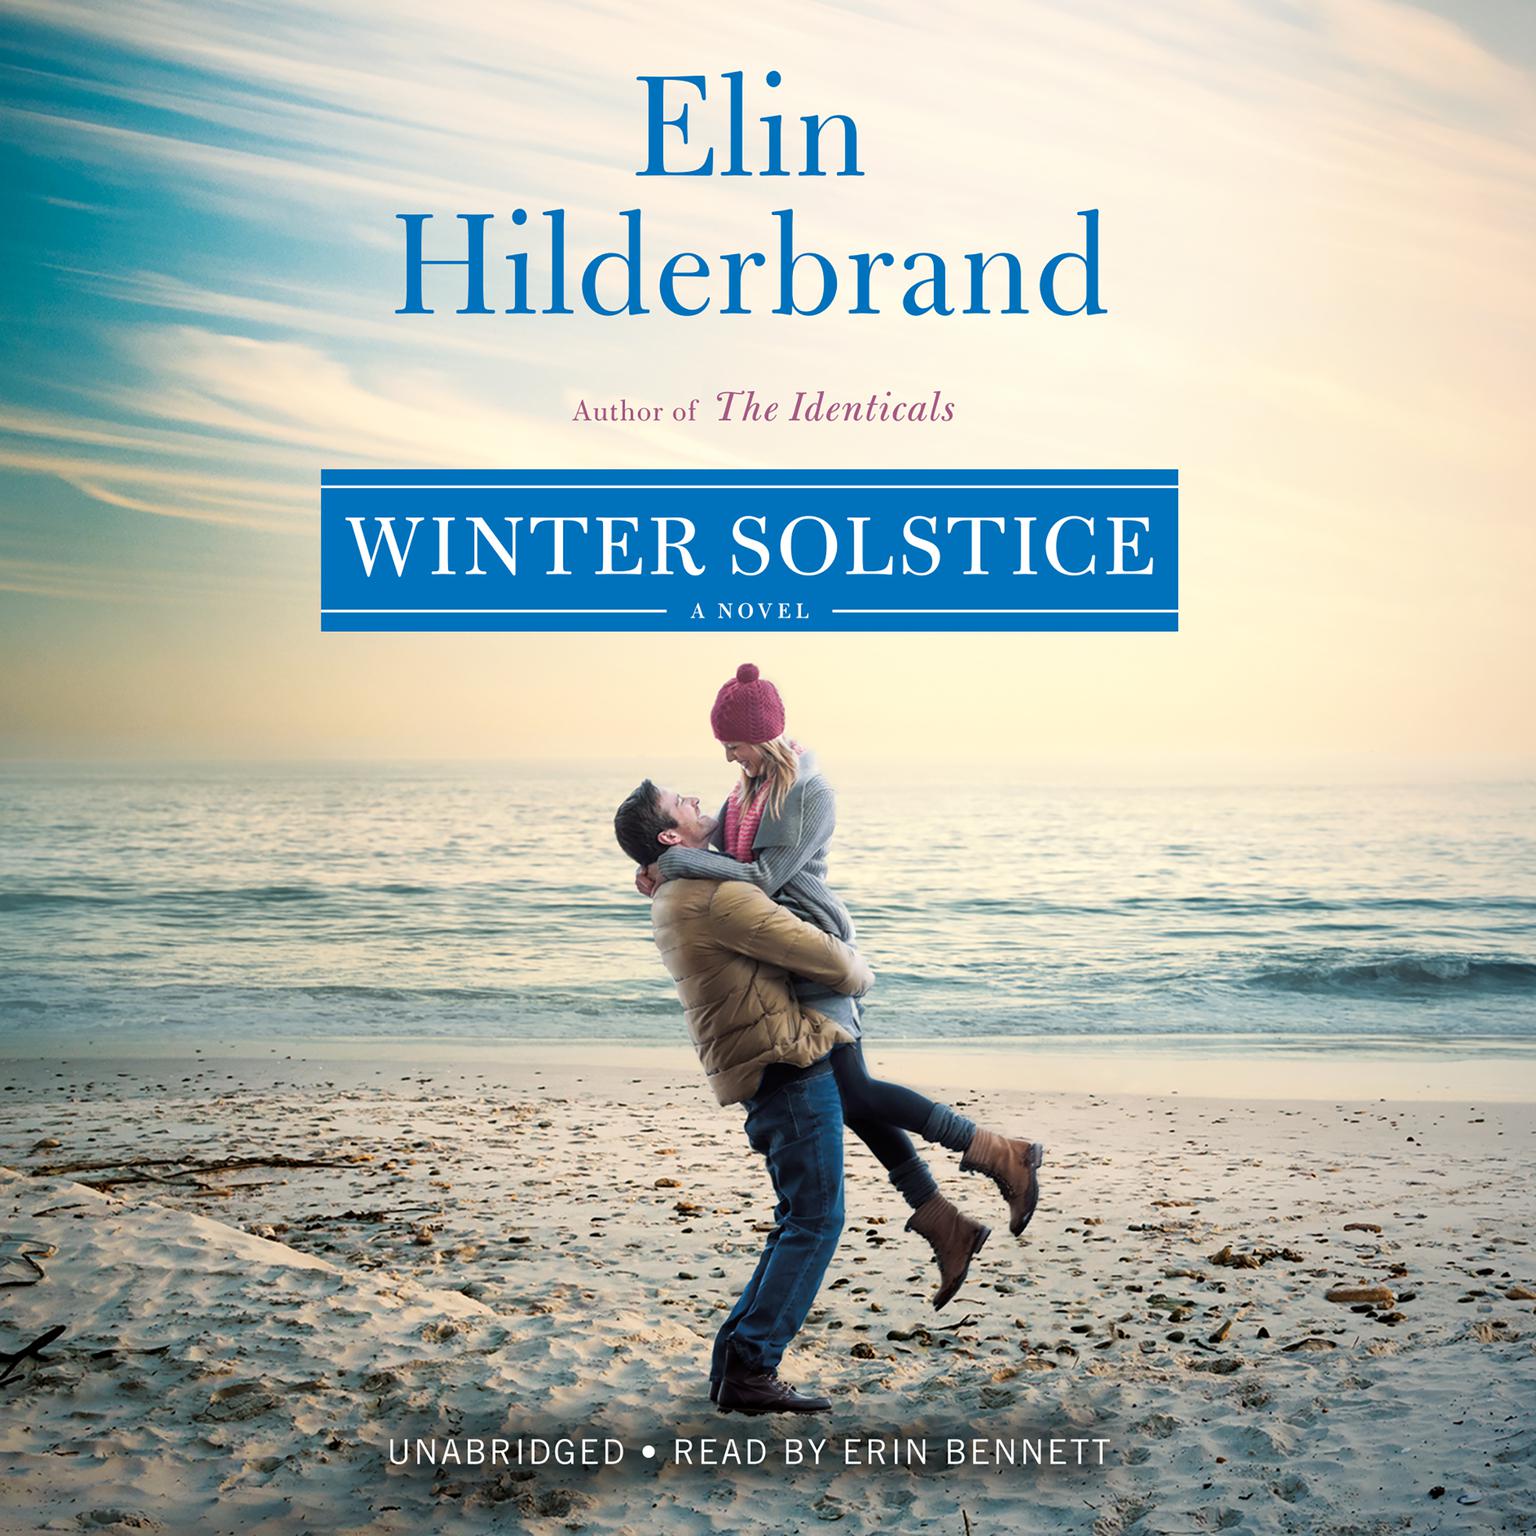 Winter Solstice Audiobook, by Elin Hilderbrand